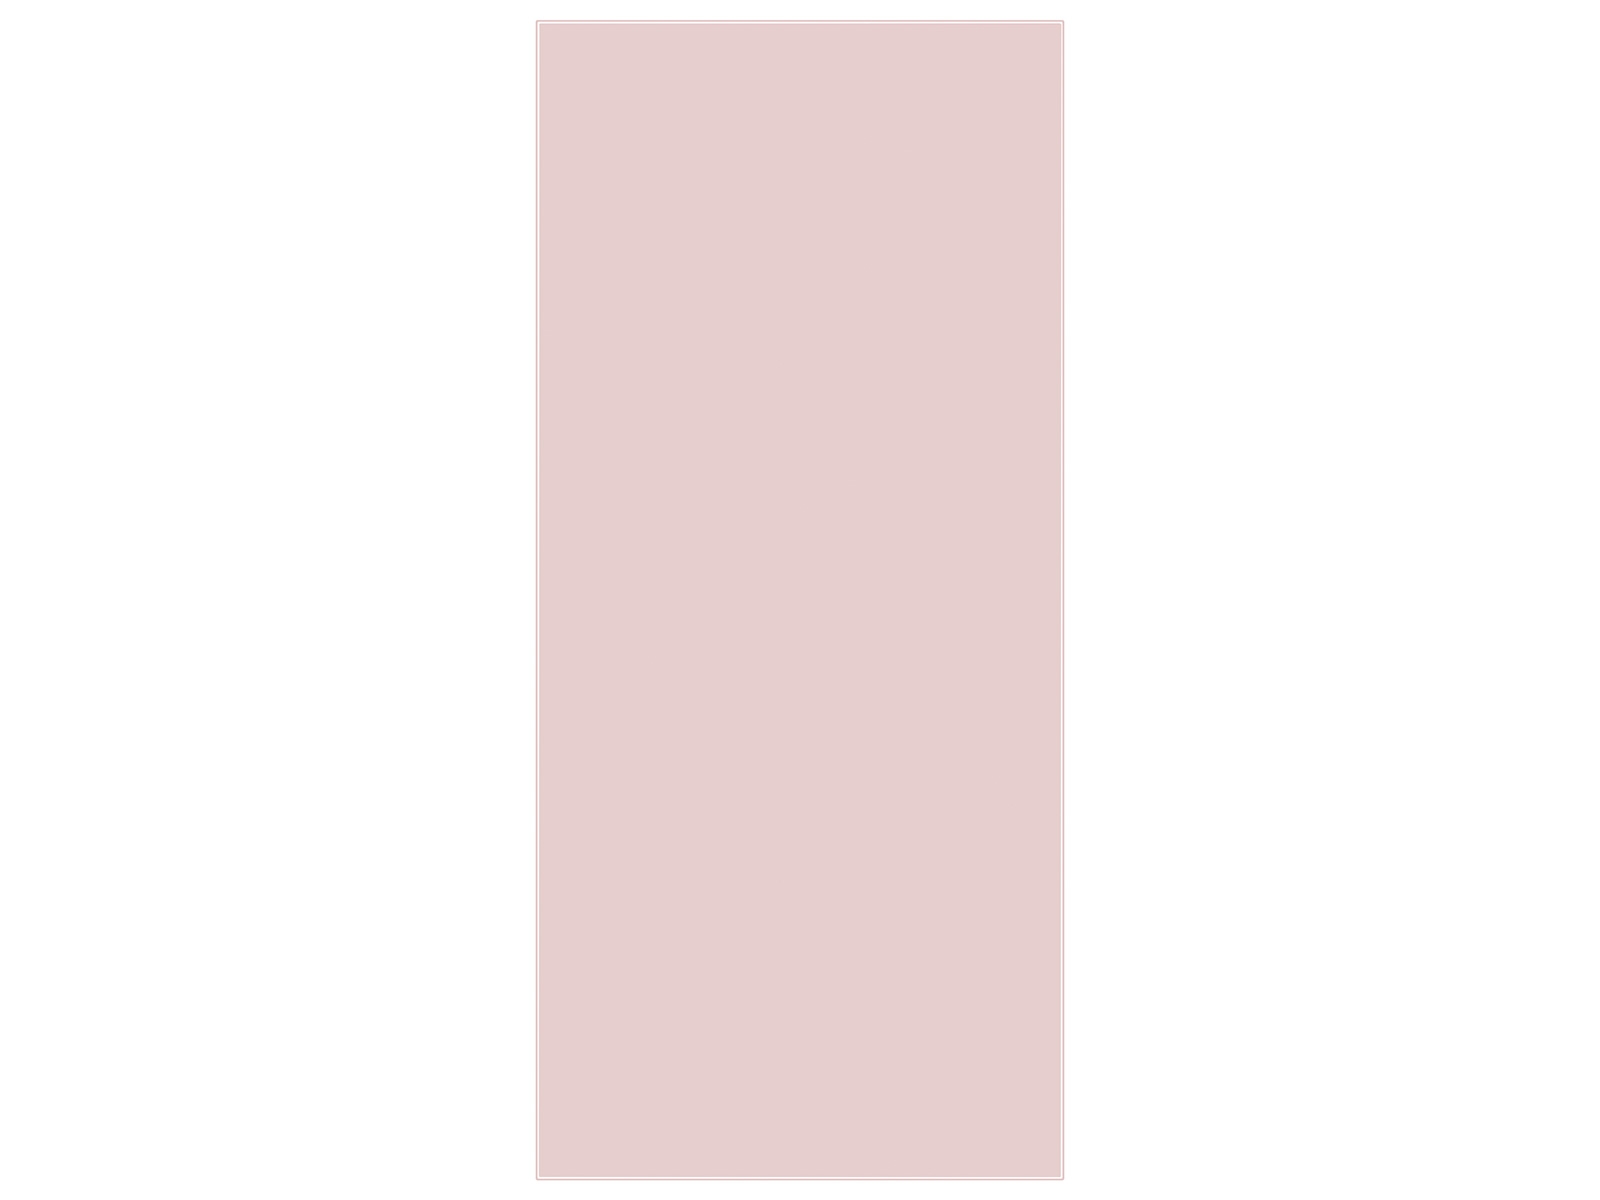 Thumbnail image of BESPOKE 4-Door Flex&trade; Refrigerator Panel in Rose Pink Glass - Top Panel